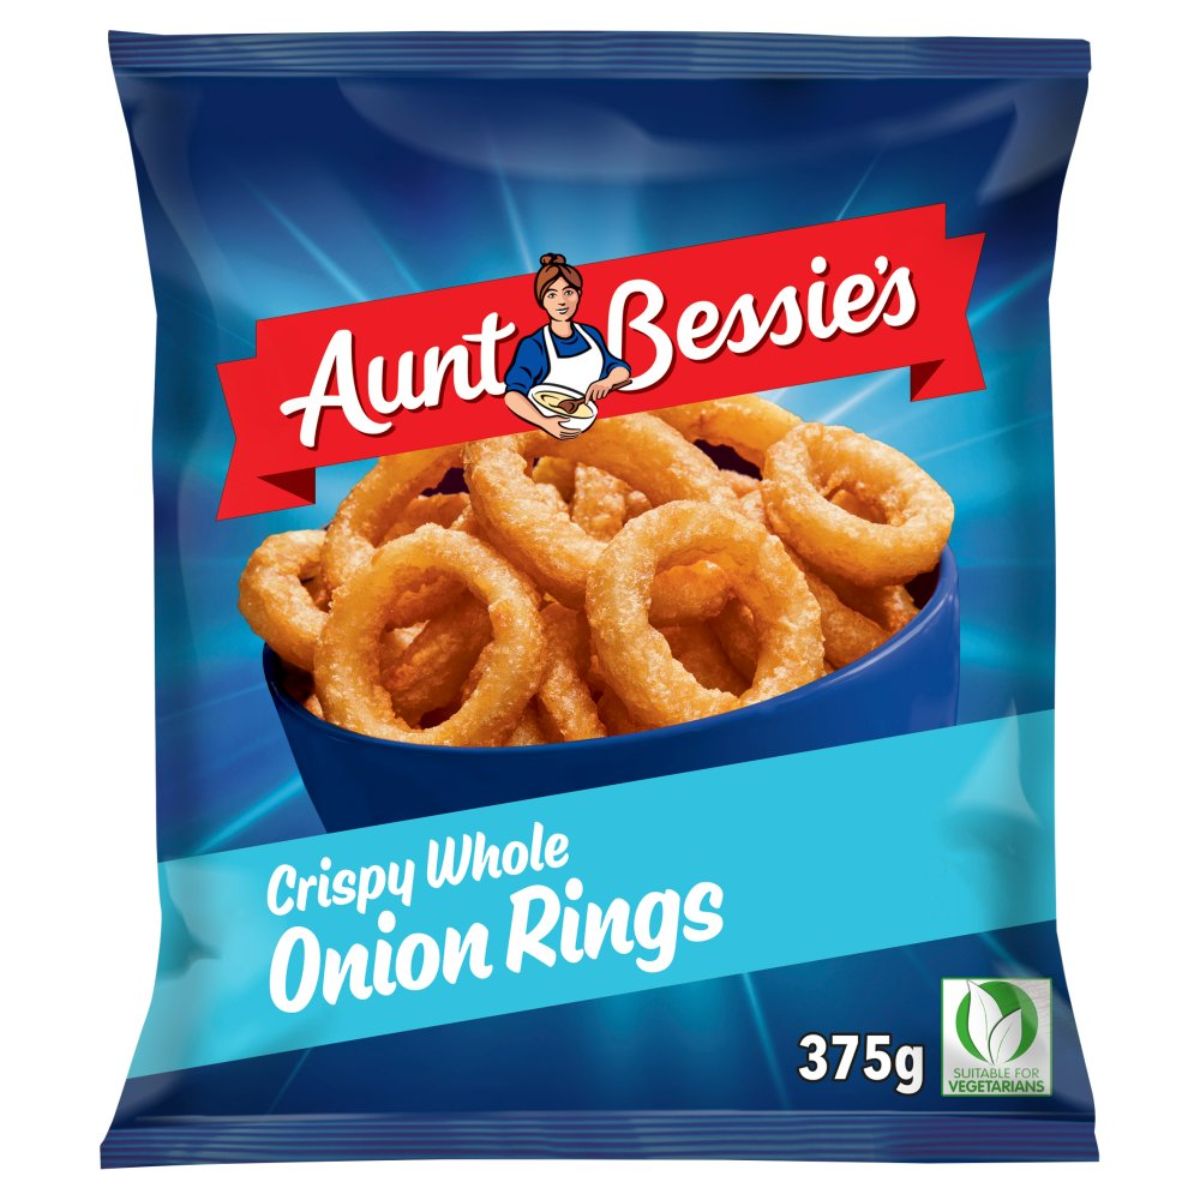 Aunt Bessies - Crispy Whole Onion Rings - 375g crispy whole onion rings.